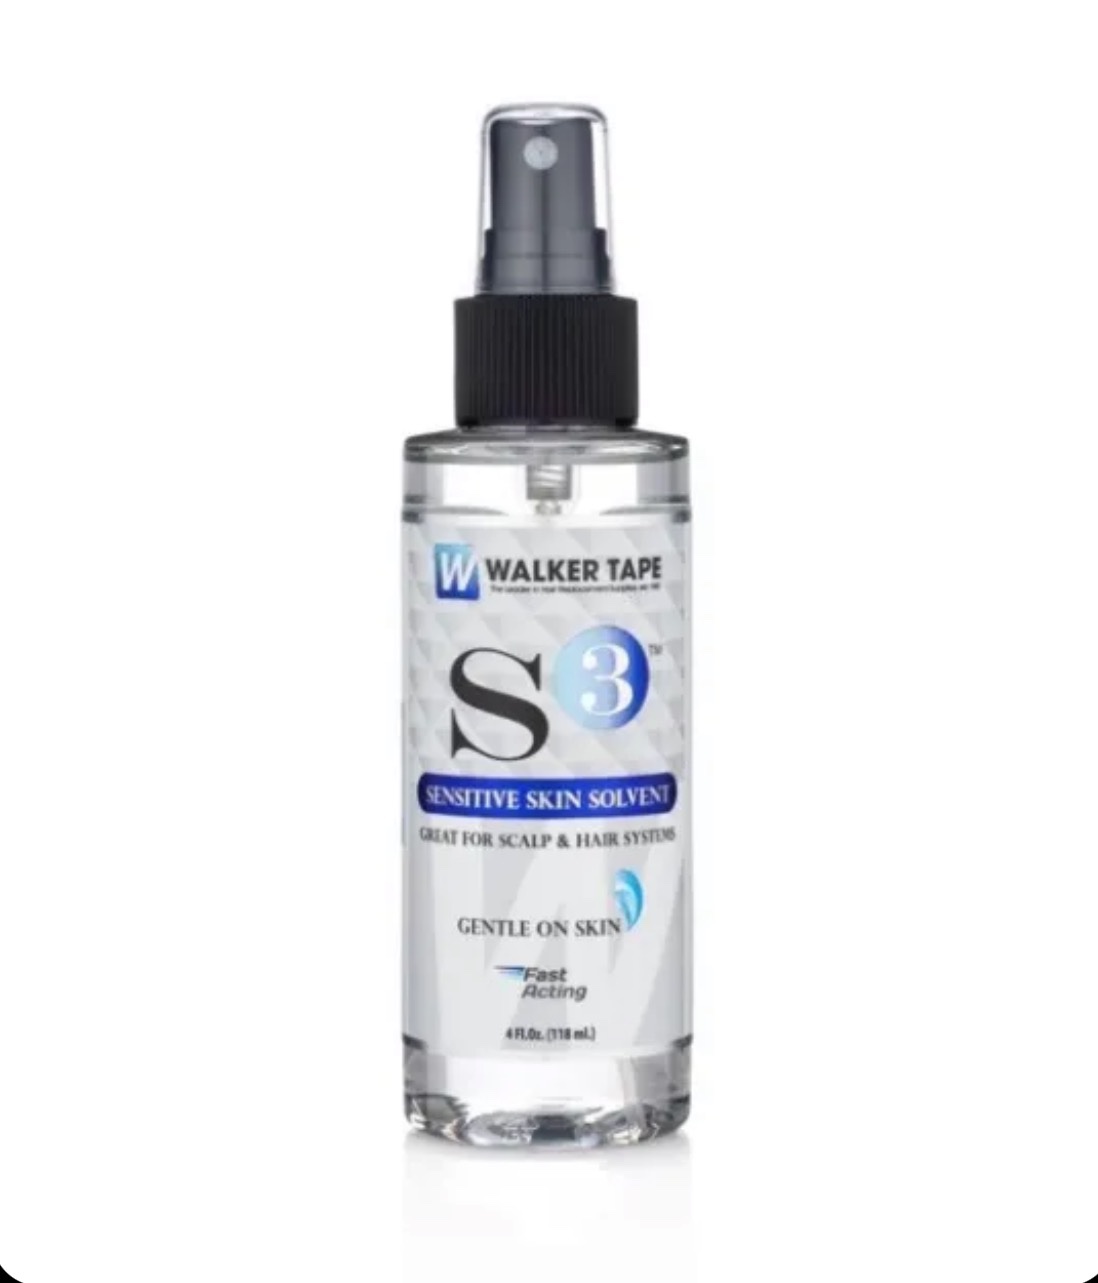 S3 Sensitive Skin Solvent